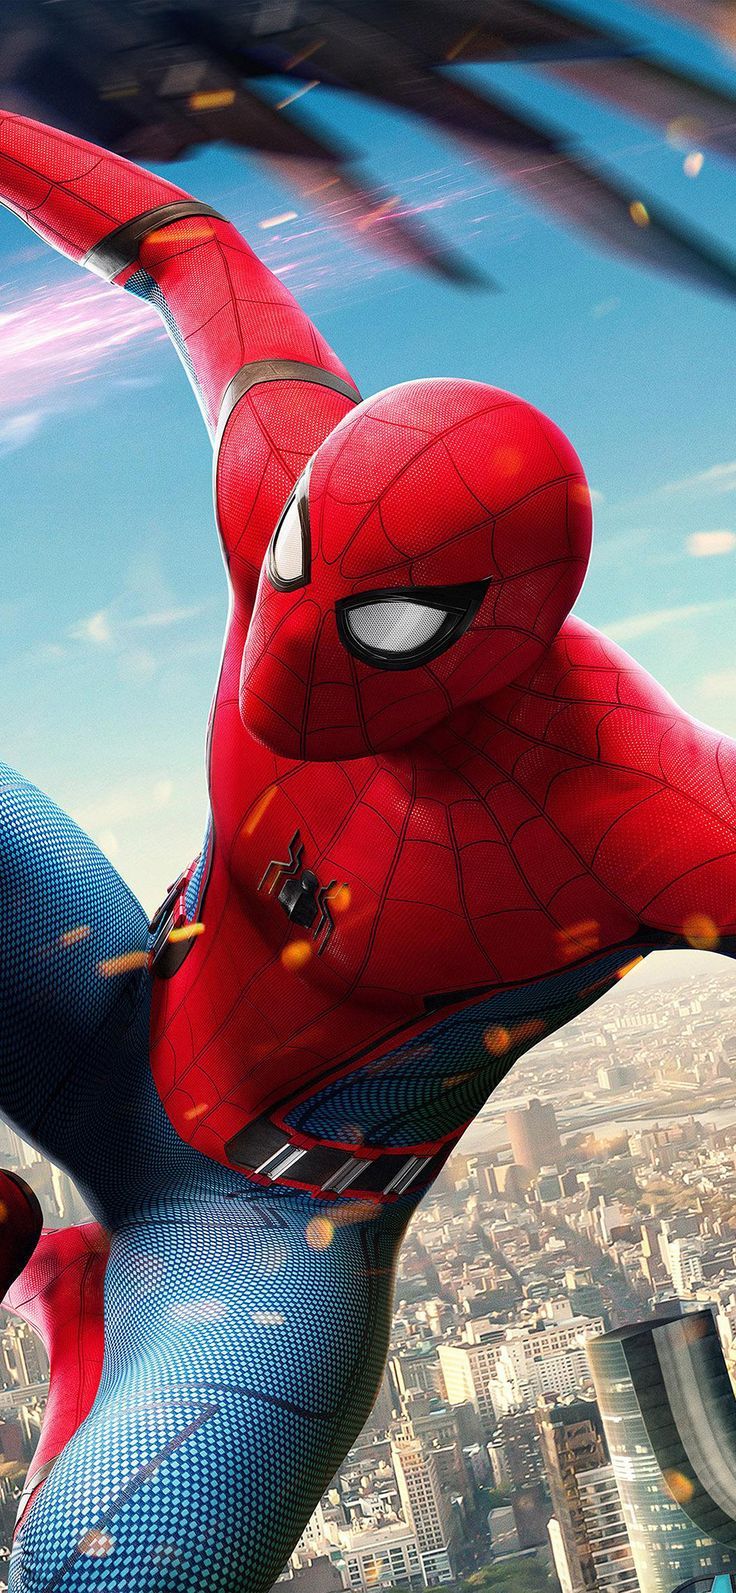 iPhone X wallpaper, spiderman hero marvel avengers art